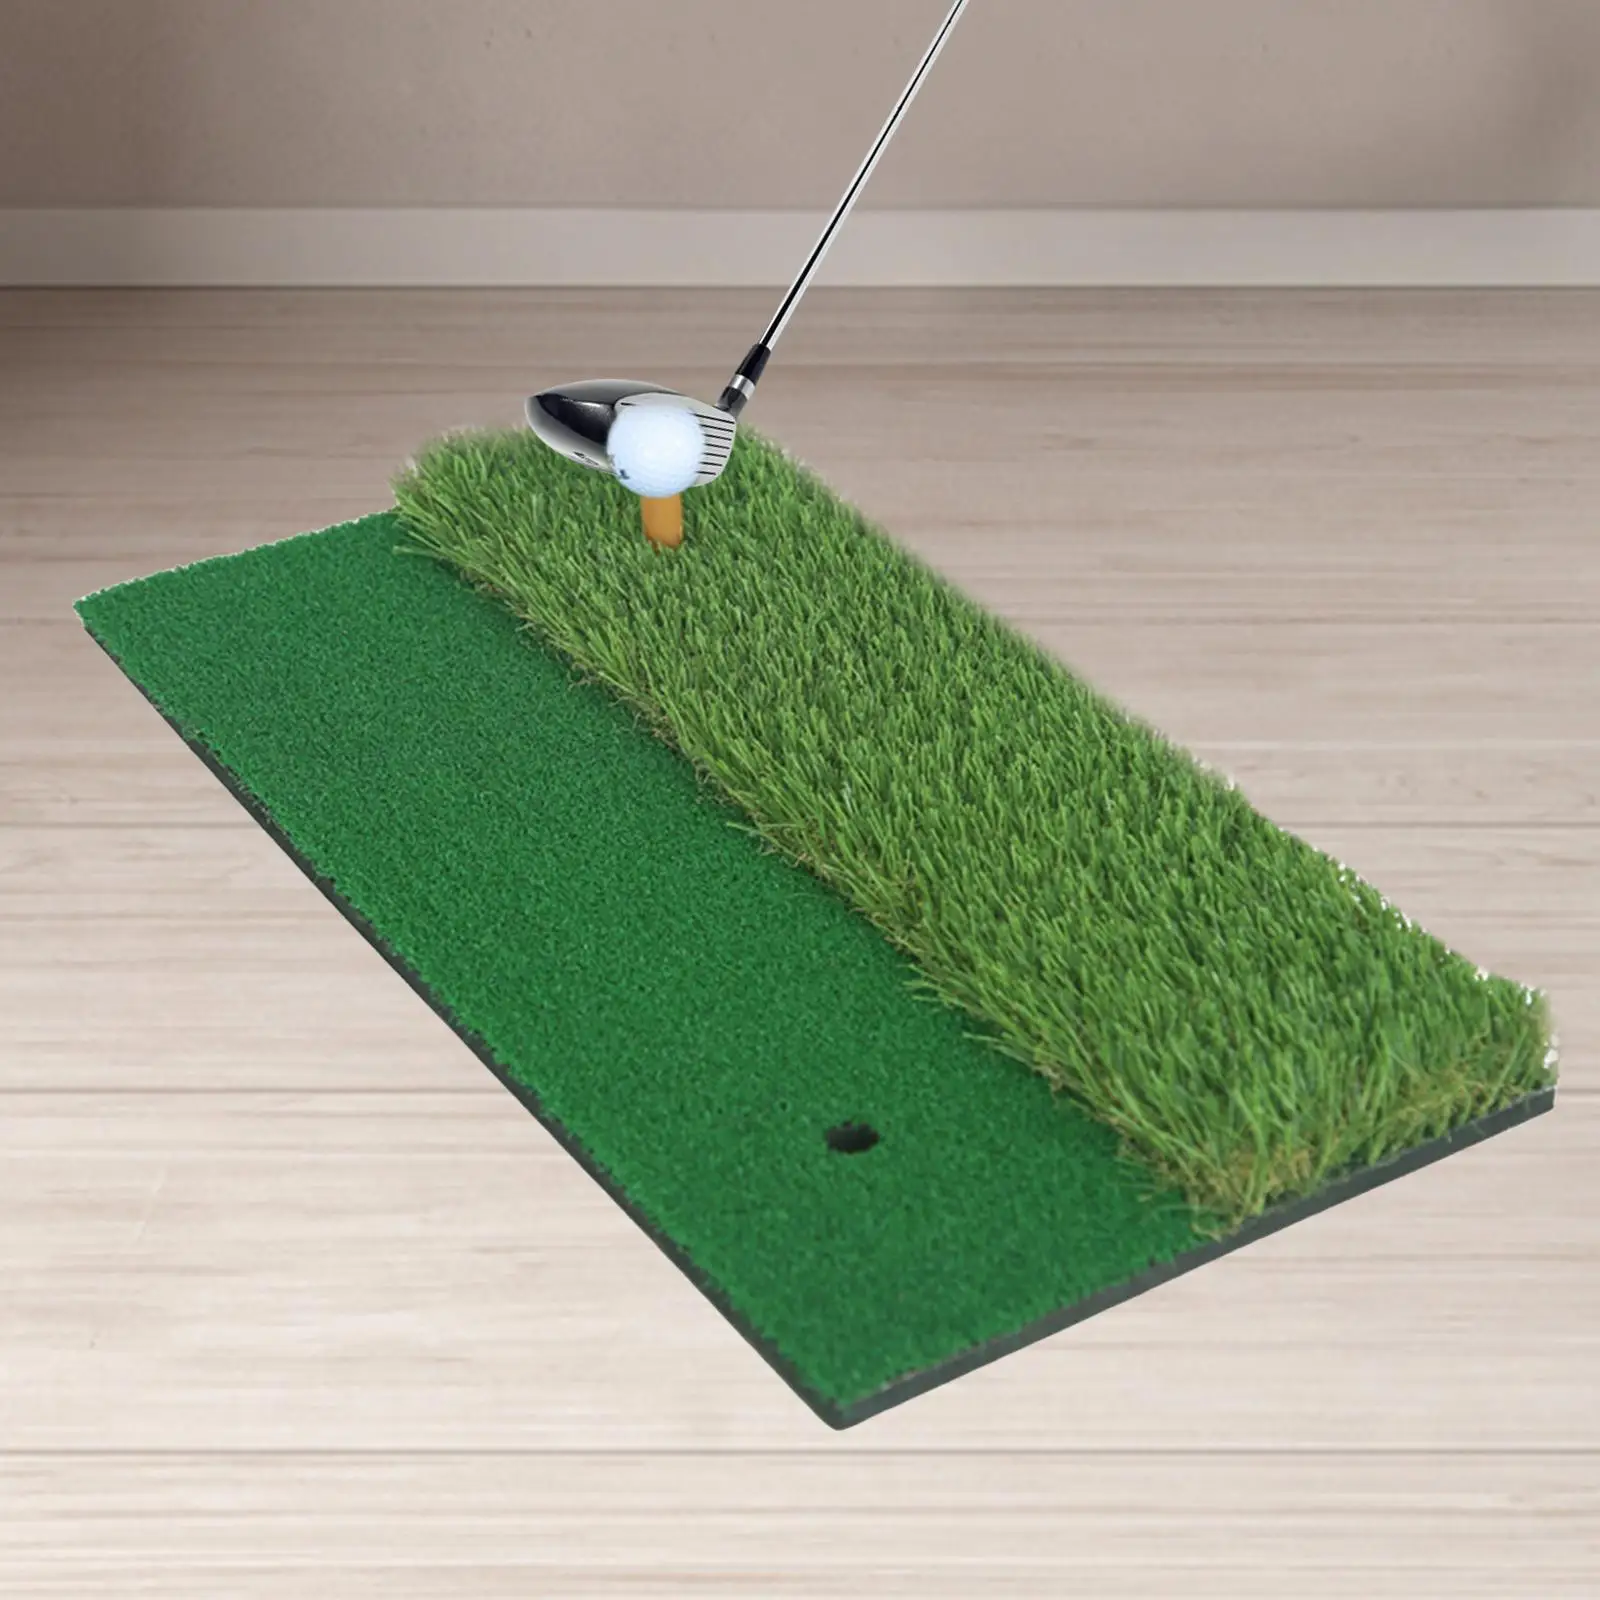 Golf Hitting Mat 30x60cm Correct Hitting Posture for Indoor Backyard Garage